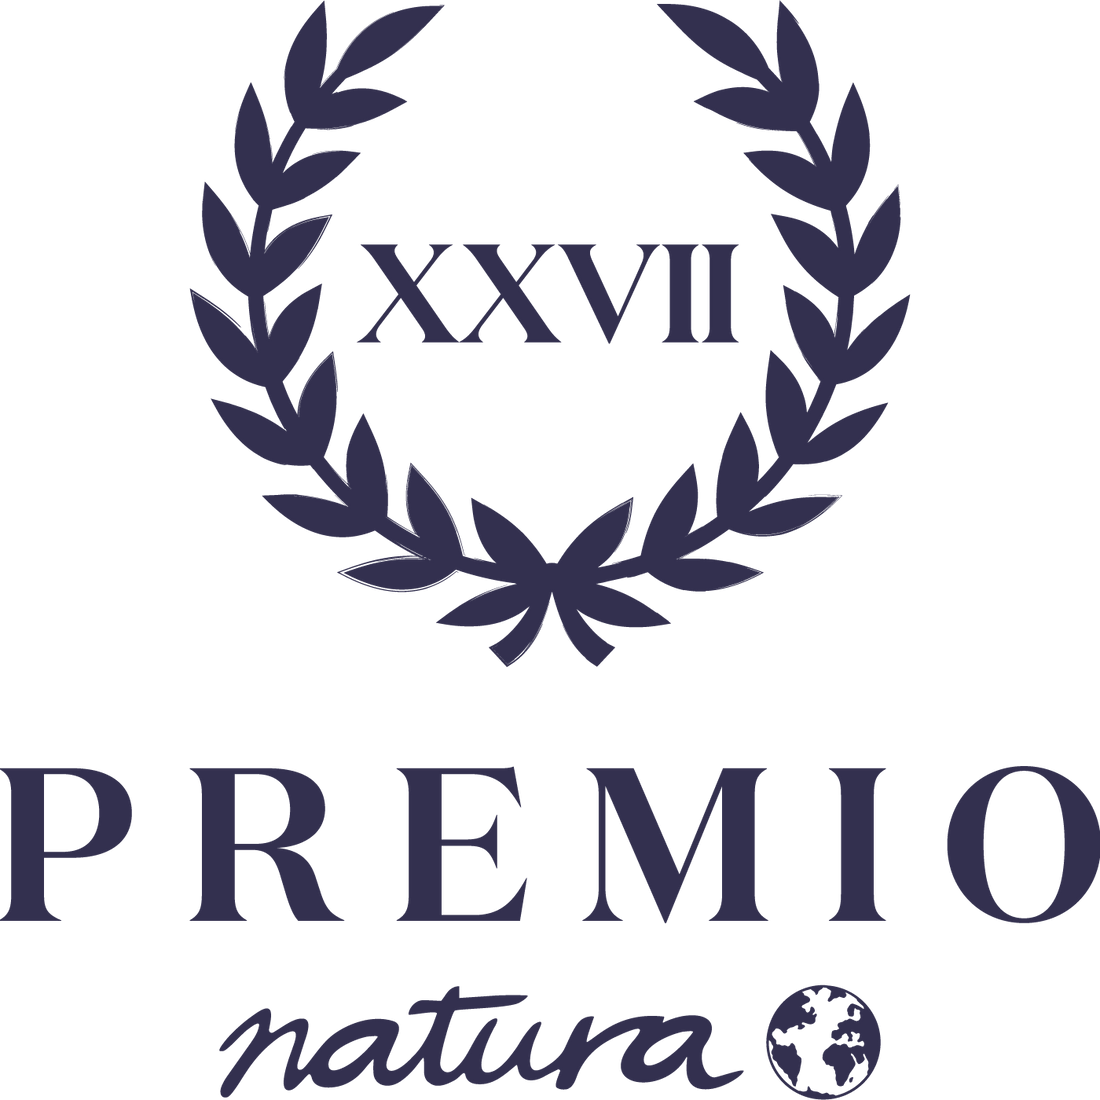 Premio Natura XXVII